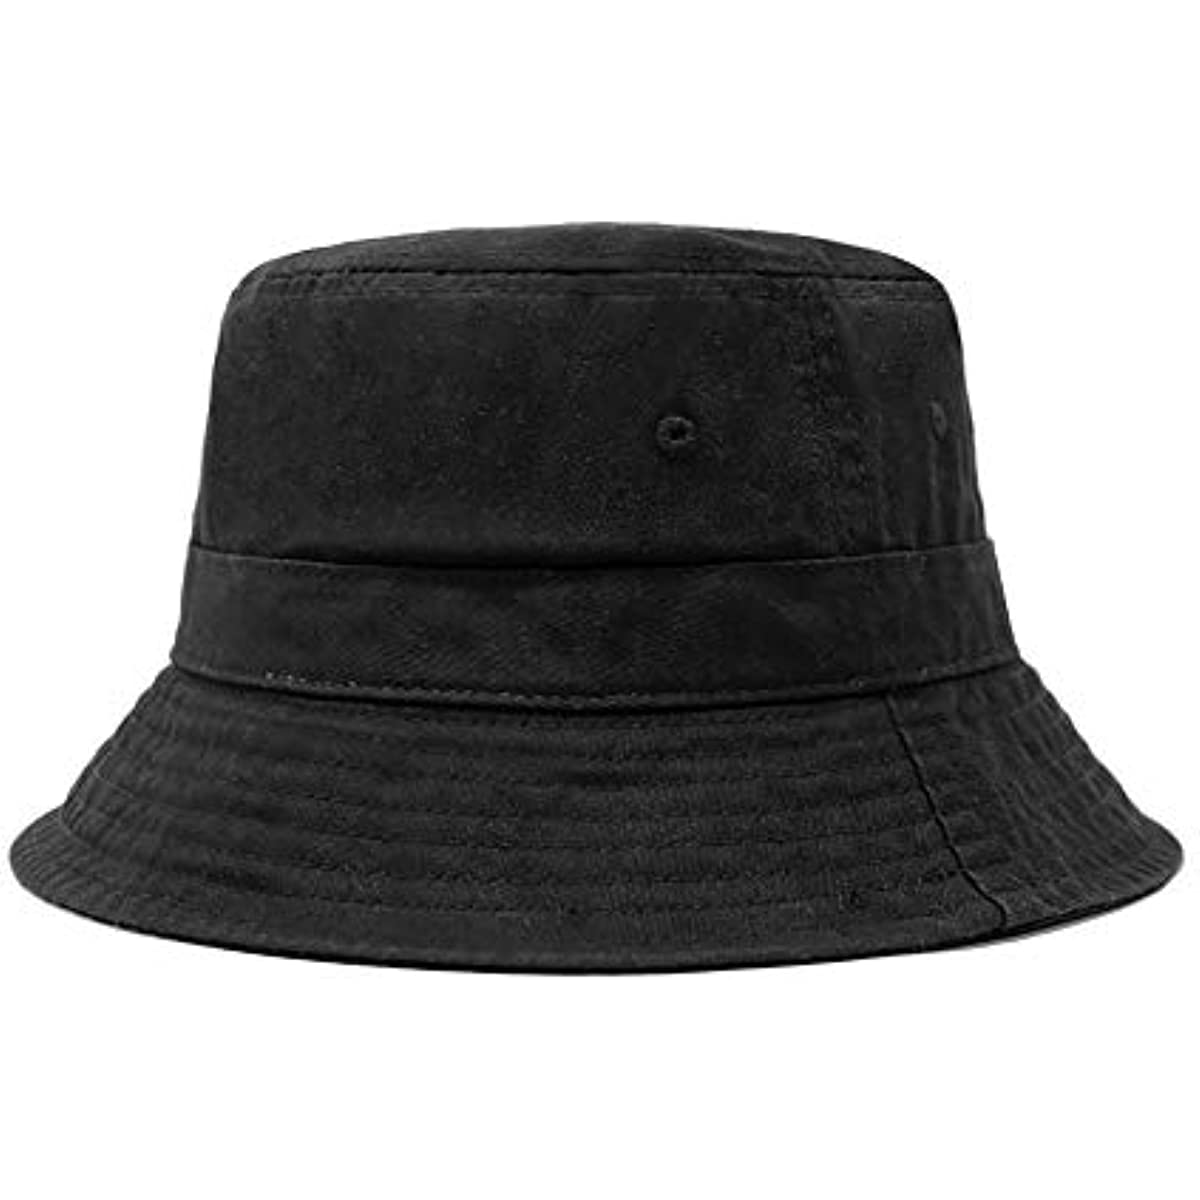 

Bucket Hat Everyday Cotton Style Unisex Trendy Lightweight Outdoor Hot Fun Summer Beach Vacation Getaway Headwear outfit bucket hat for women, Multi